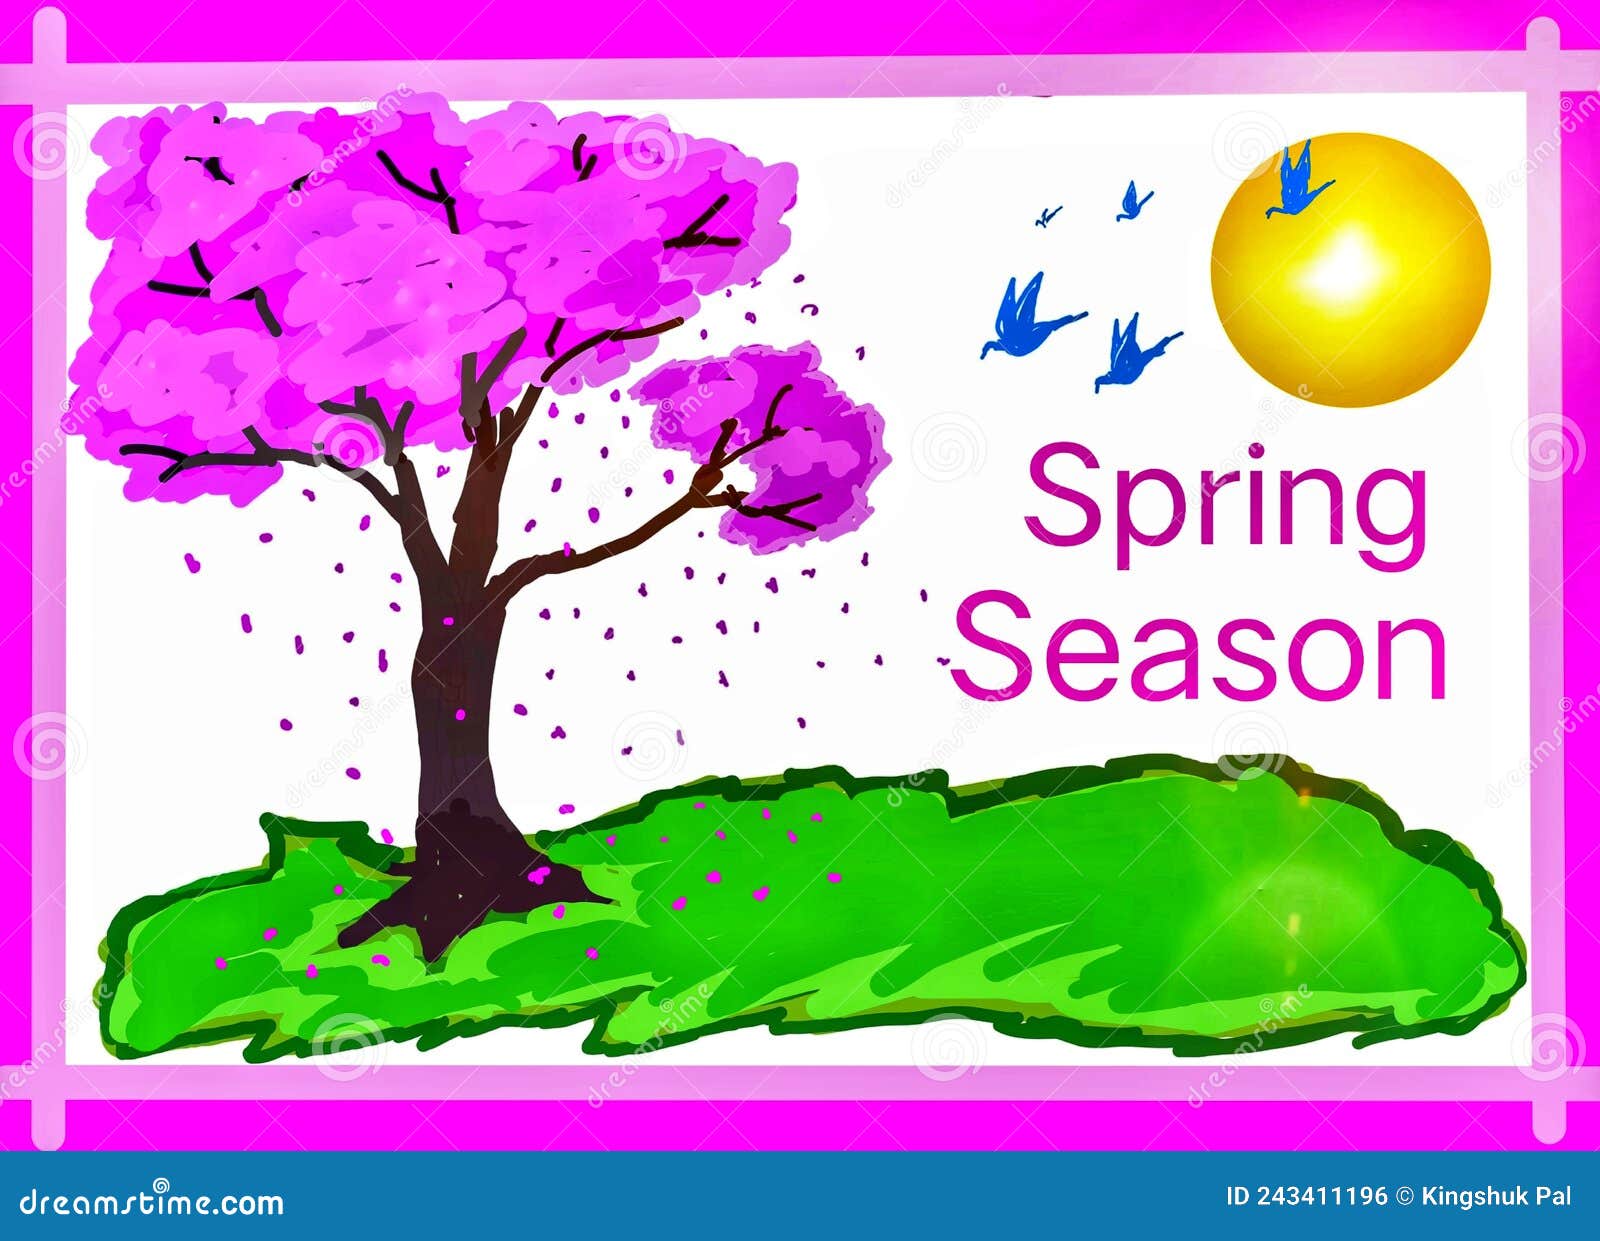 Spring Drawing Images - Free Download on Freepik-saigonsouth.com.vn